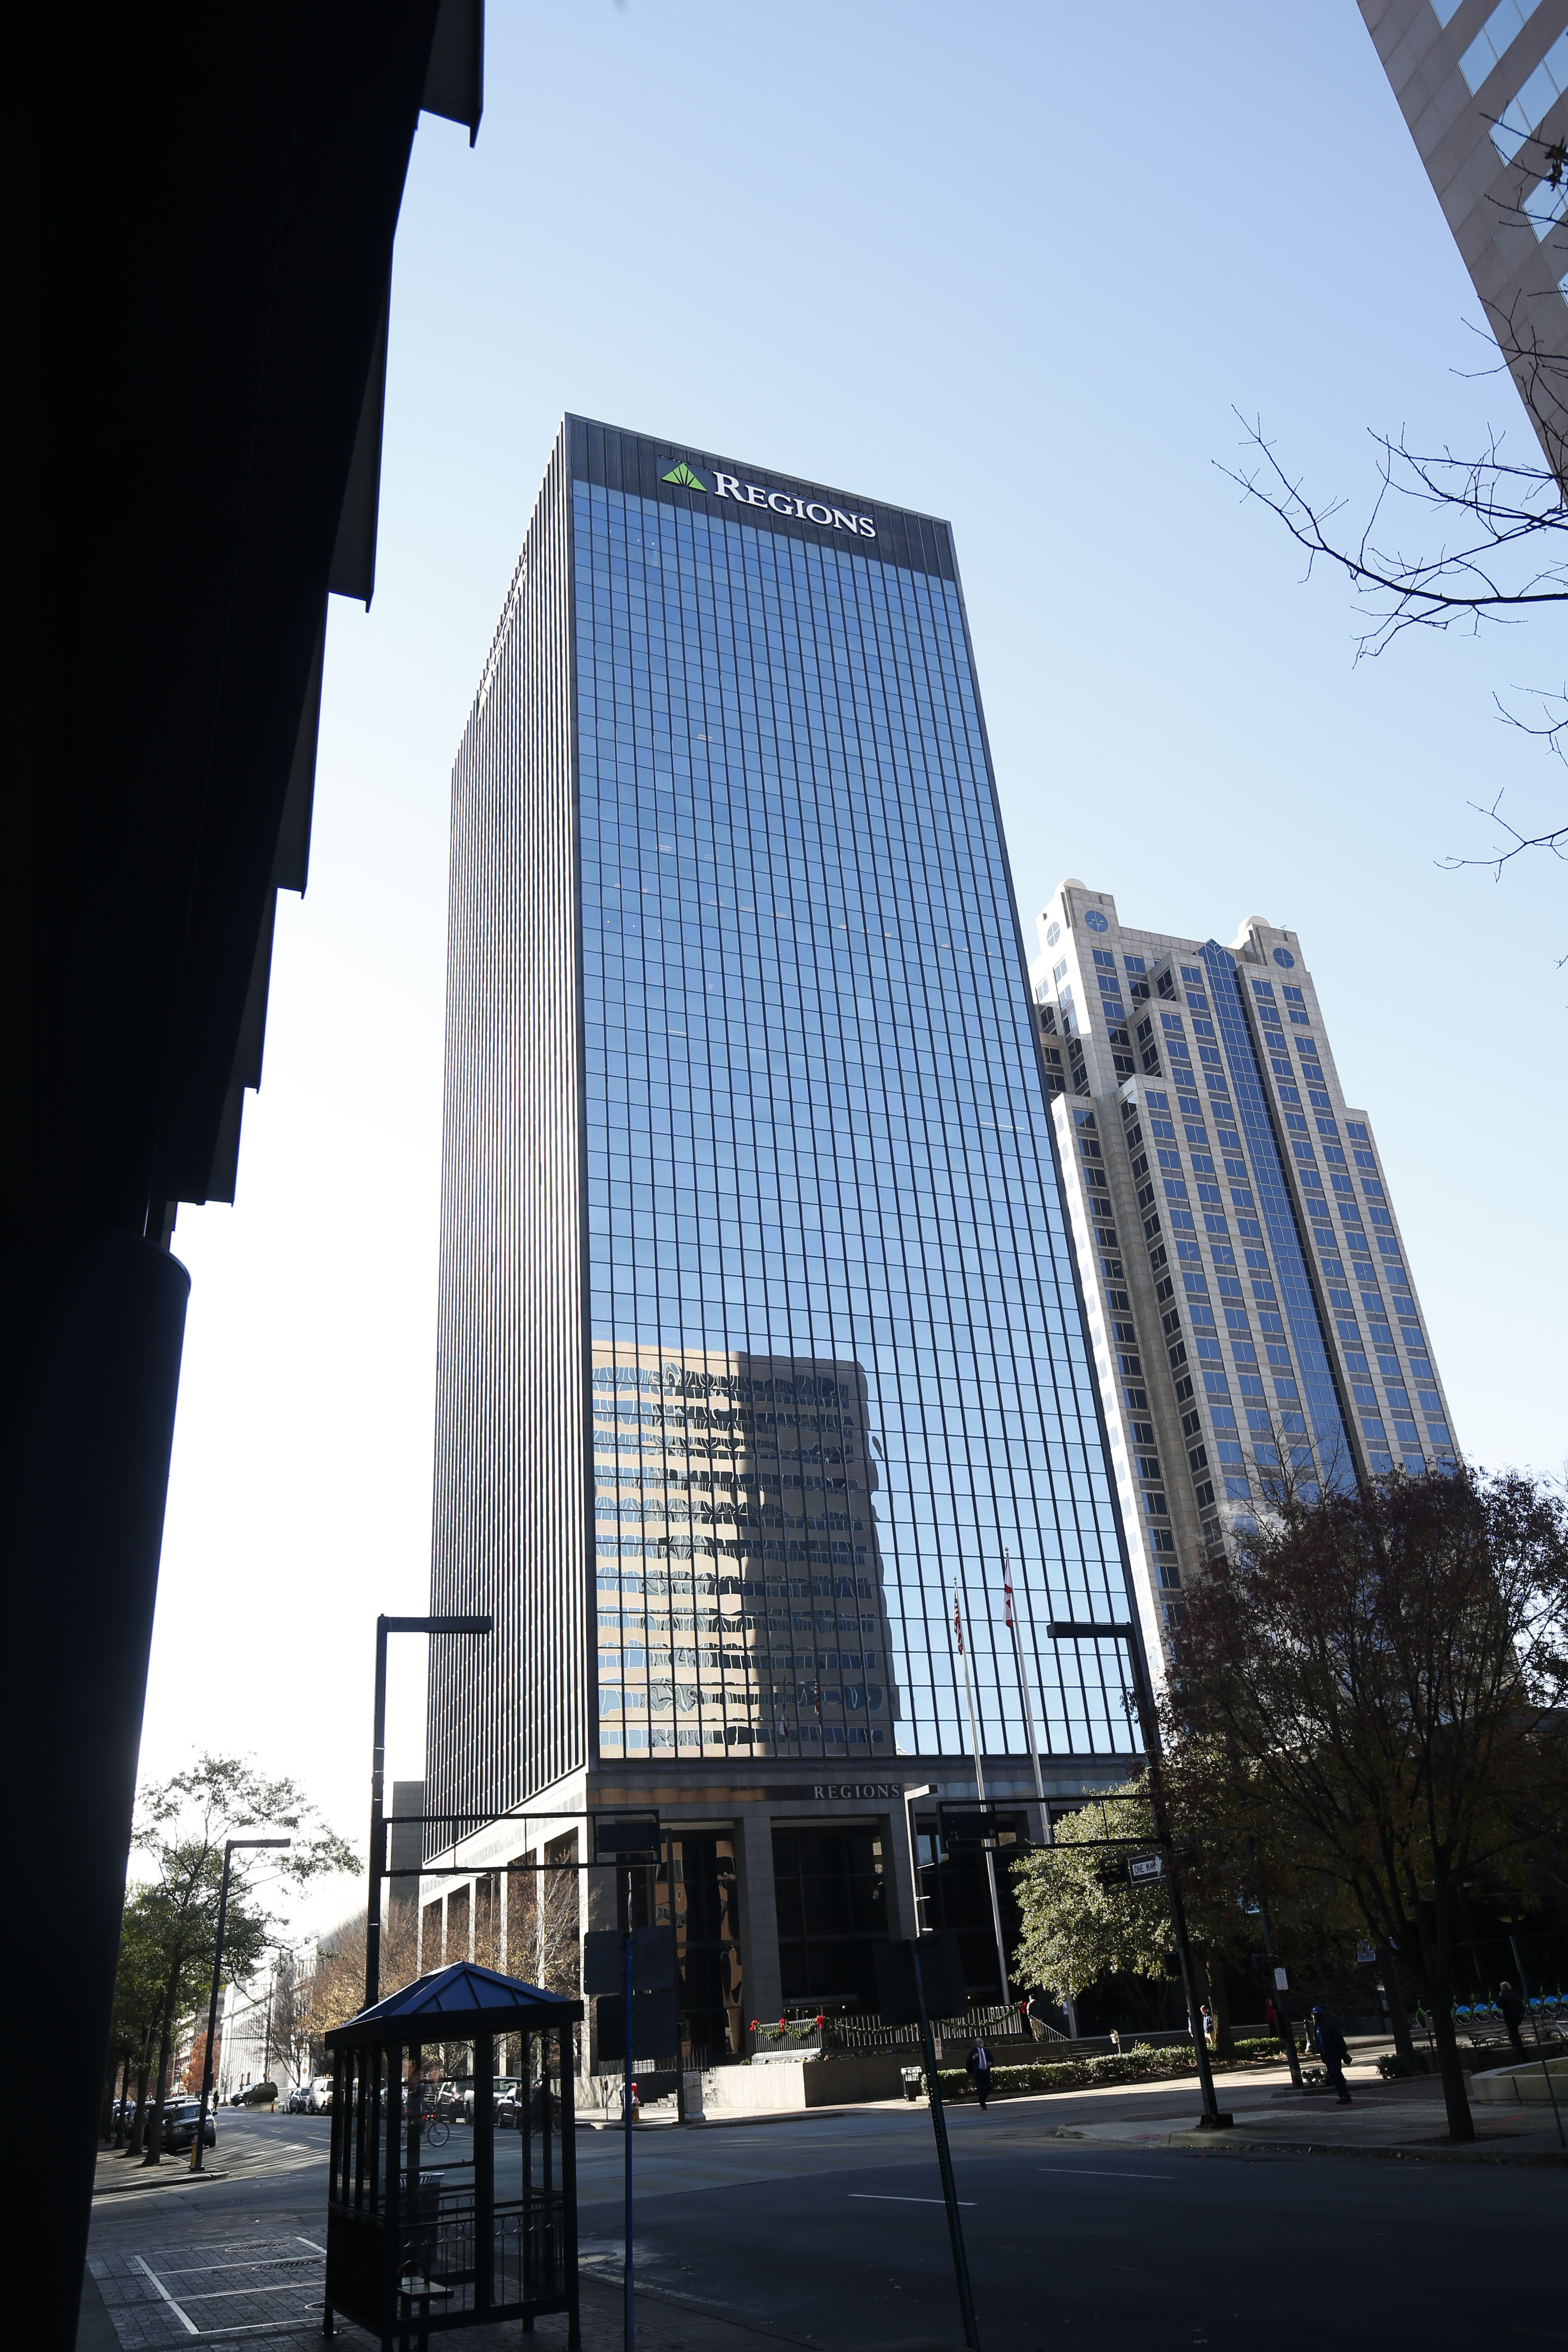 Regions Bank headquarters in Birmingham Alabama